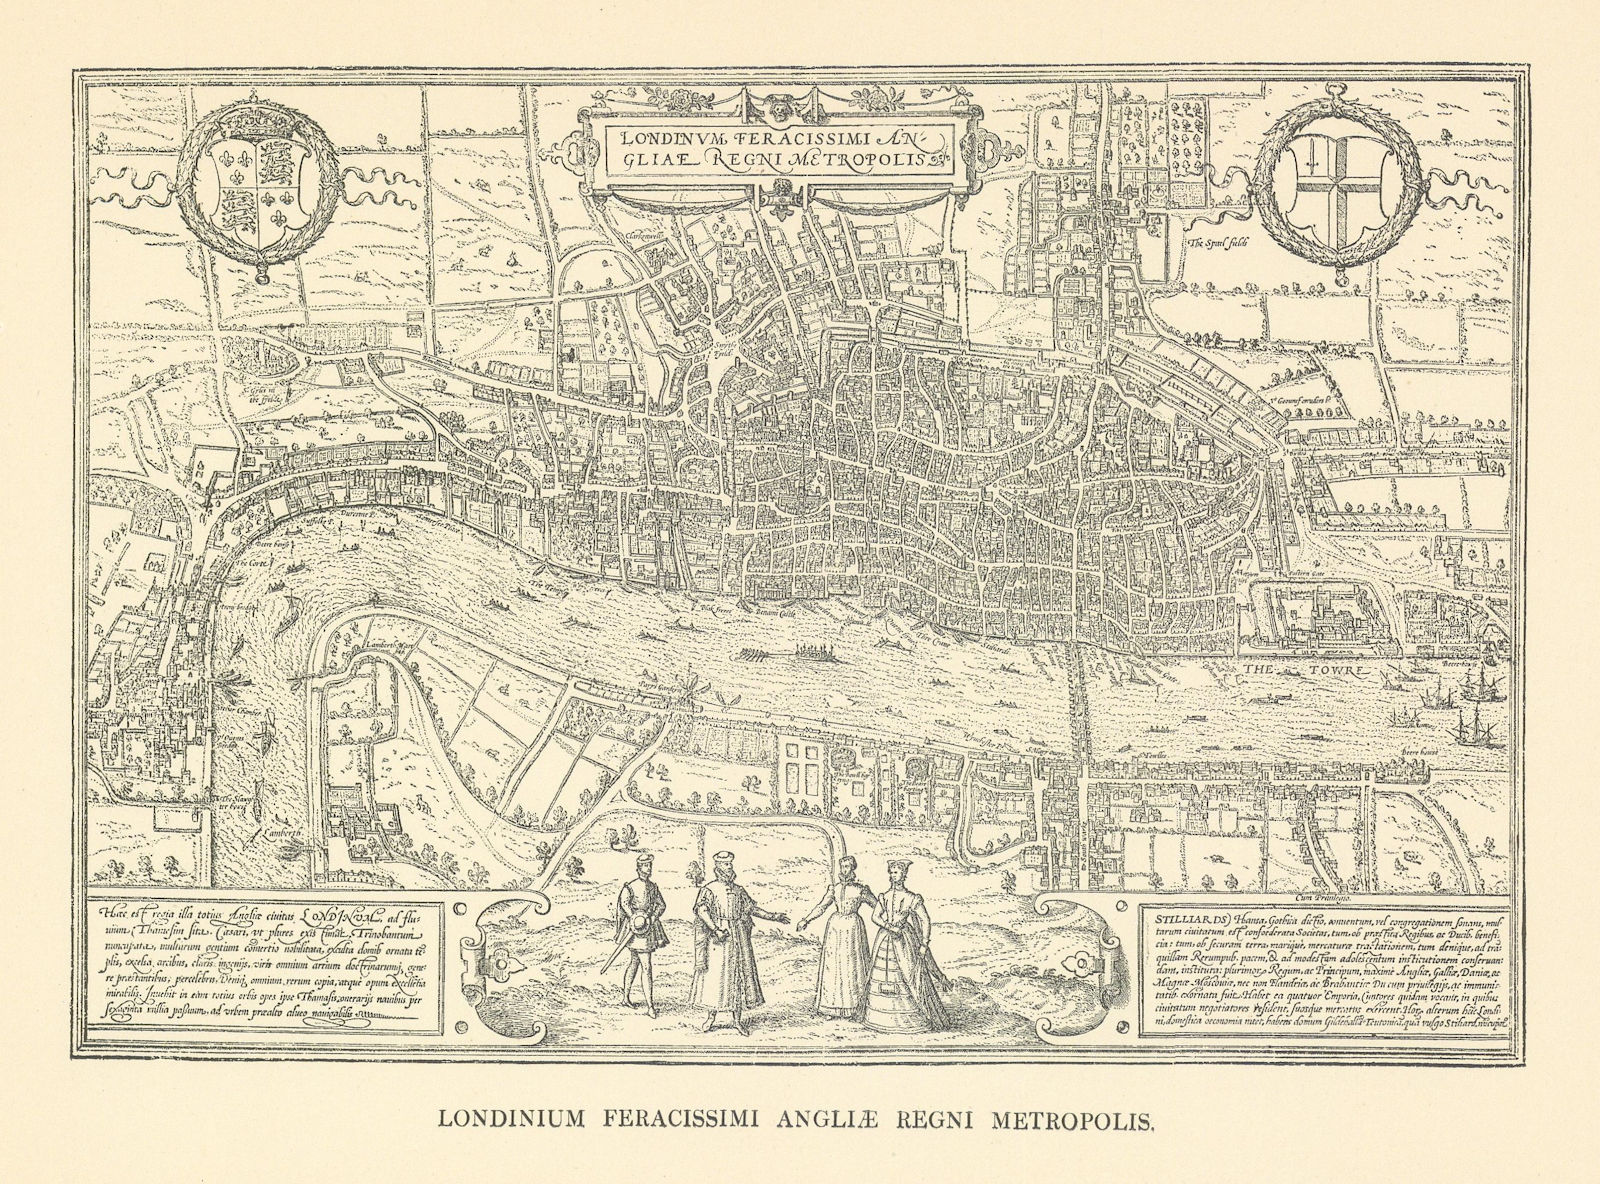 Londinium Feracissimi Angliae Regni Metropolis c.1572 after Hoefnagel 1908 map